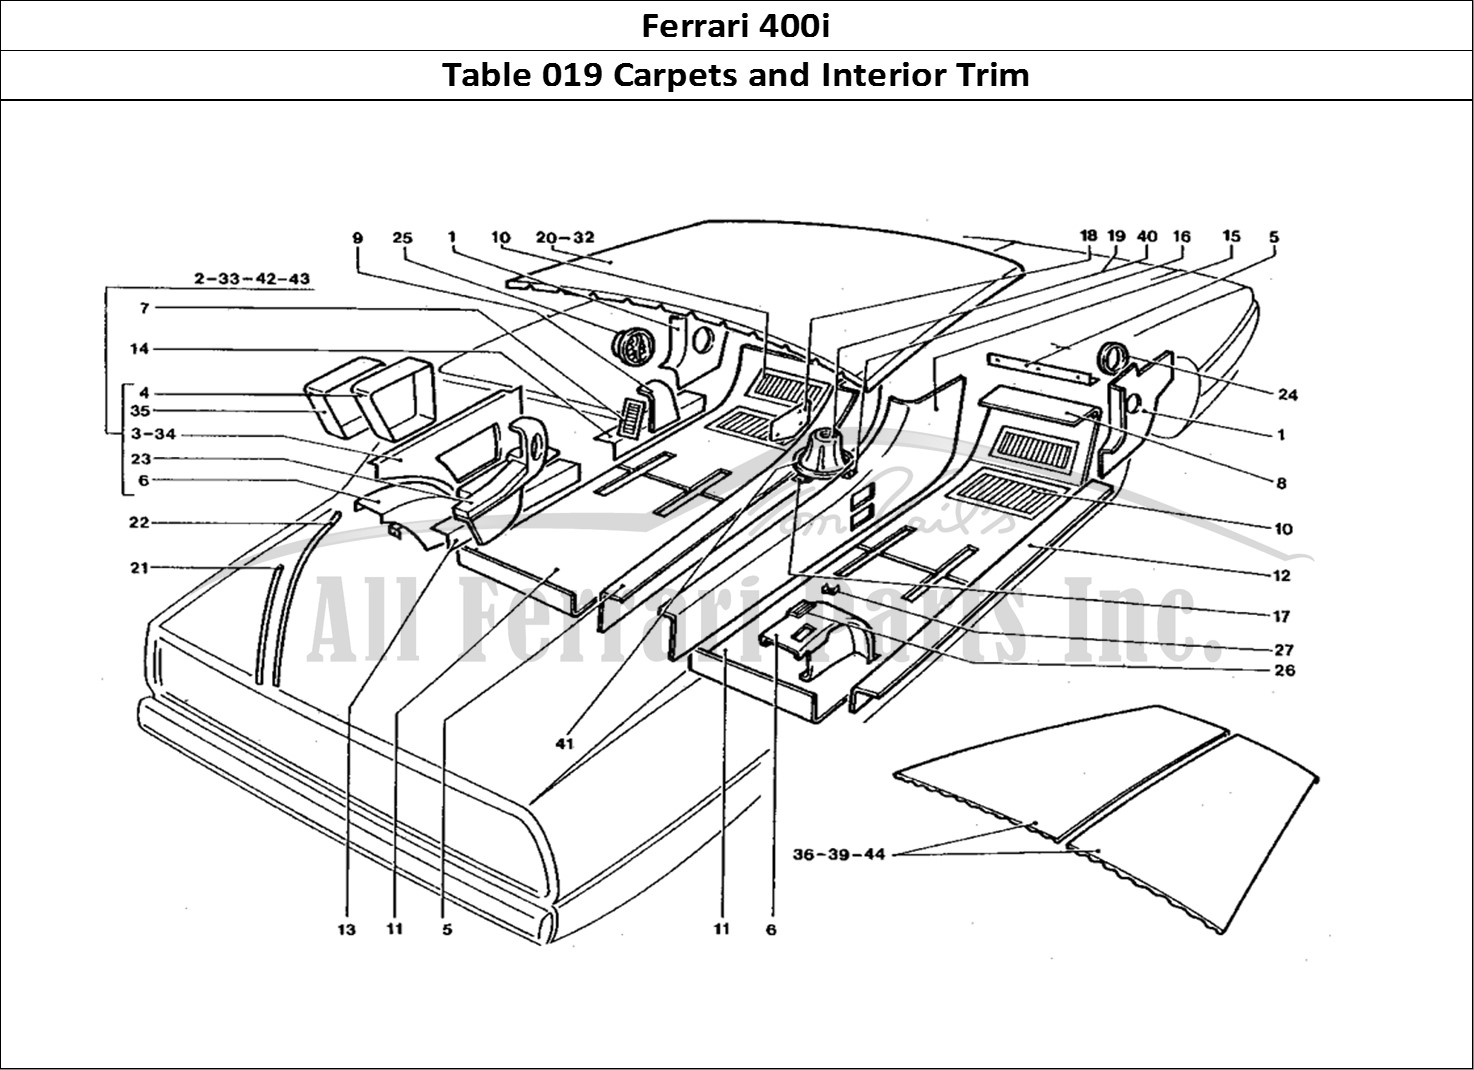 Ferrari Parts Ferrari 400 GT (Coachwork) Page 019 Inner carpets & Trim